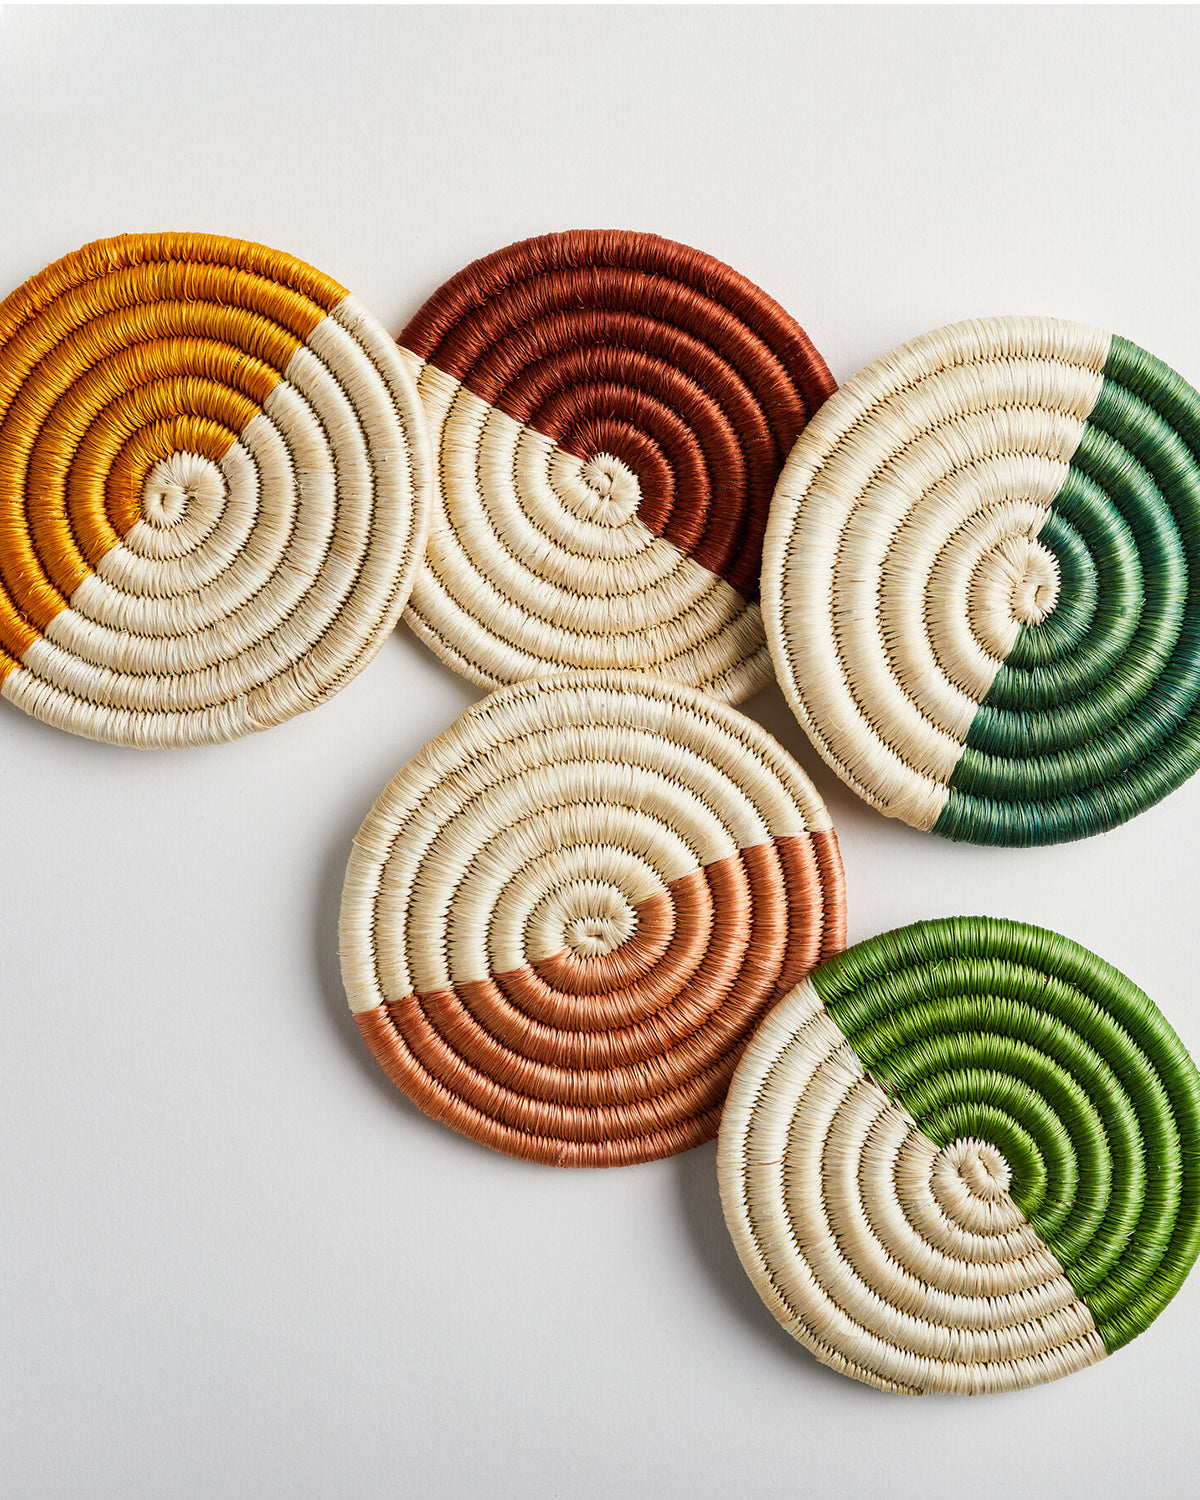 Monserrate Woven Coaster Sets - 4 colors